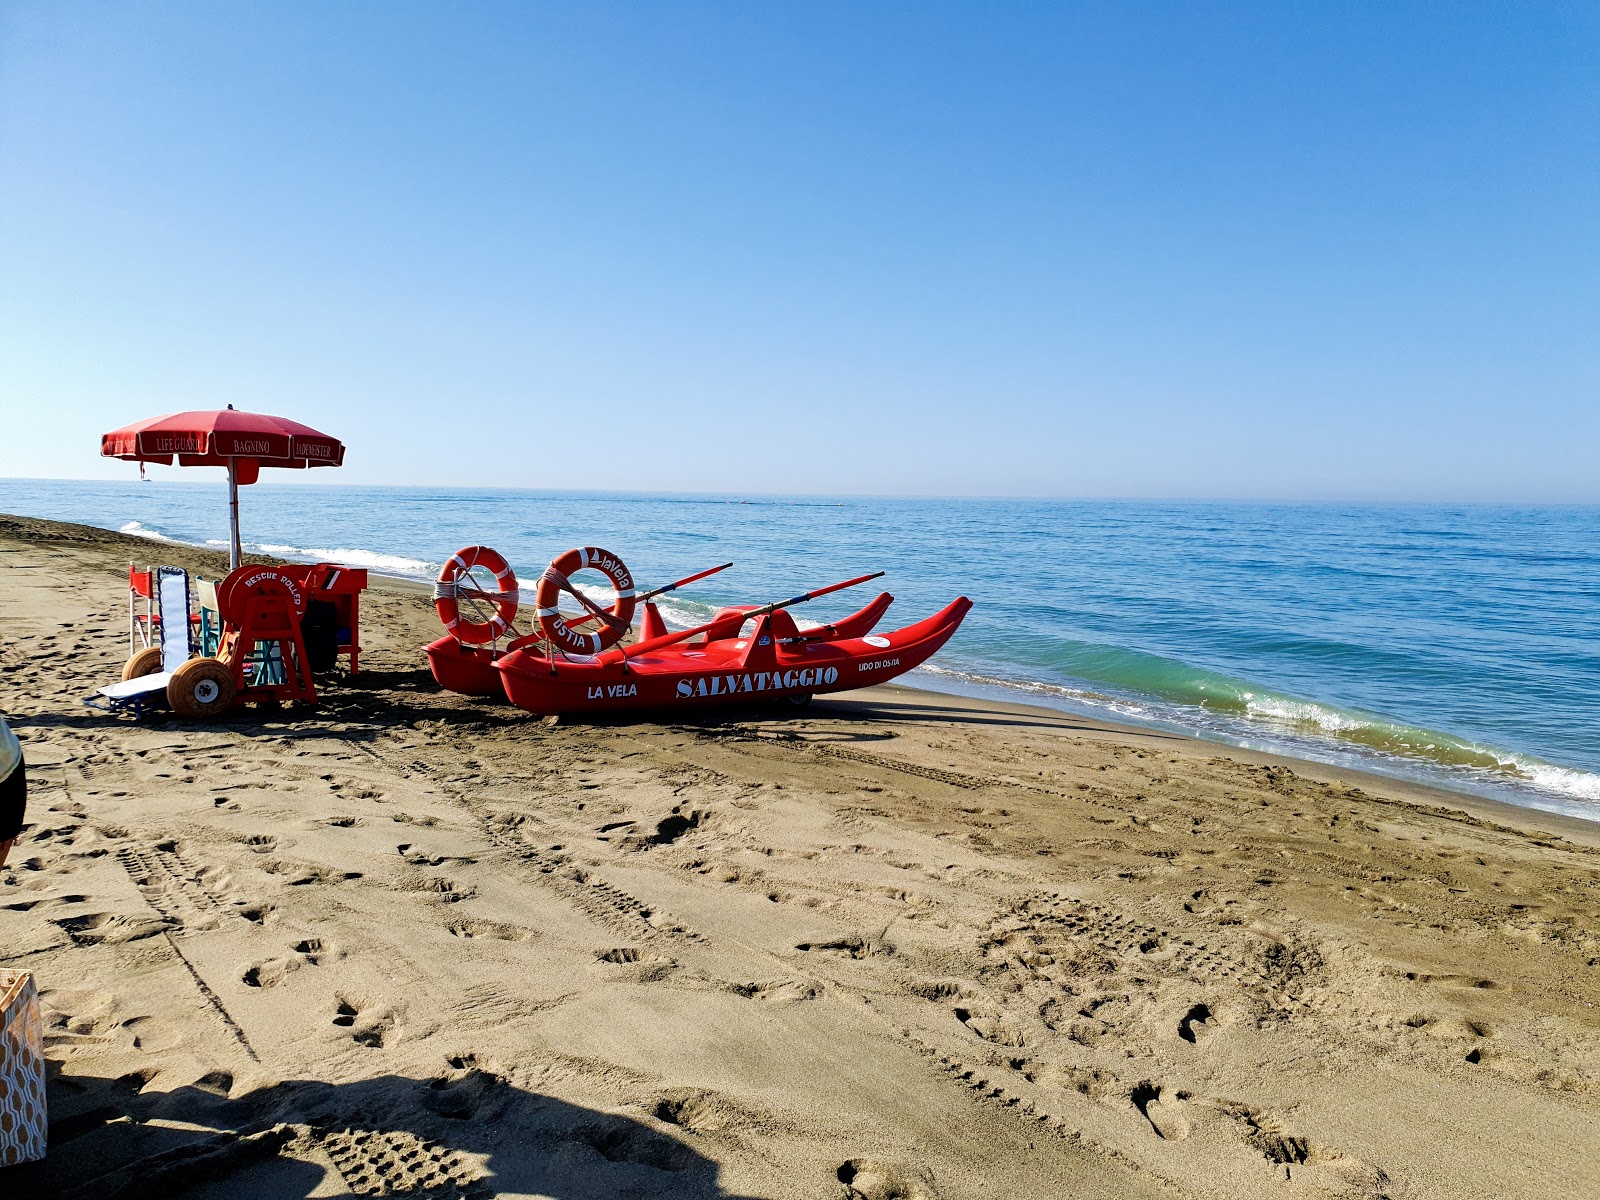 La spiaggia di Bettina的照片 带有碧绿色纯水表面